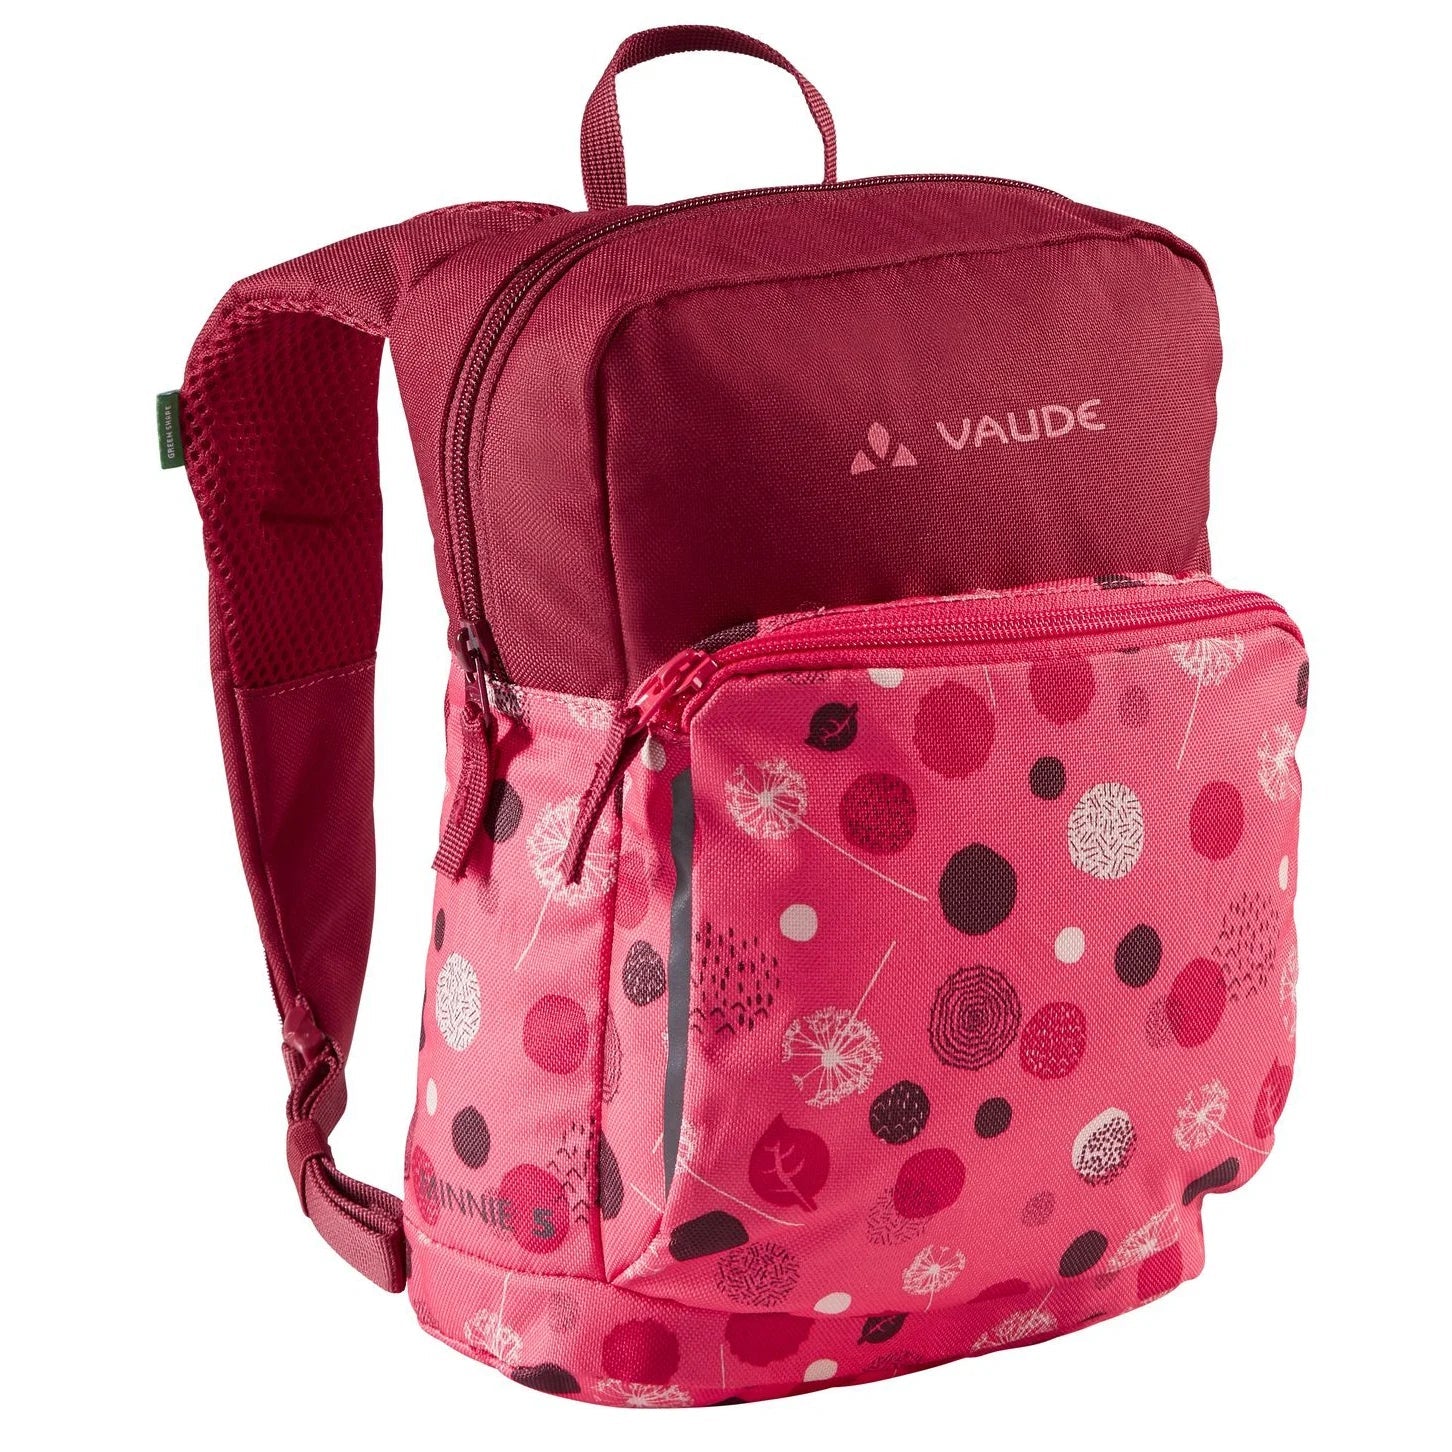 Vaude Family Minnie 5 Kinderrucksack 26 cm - bright pink-cranberry